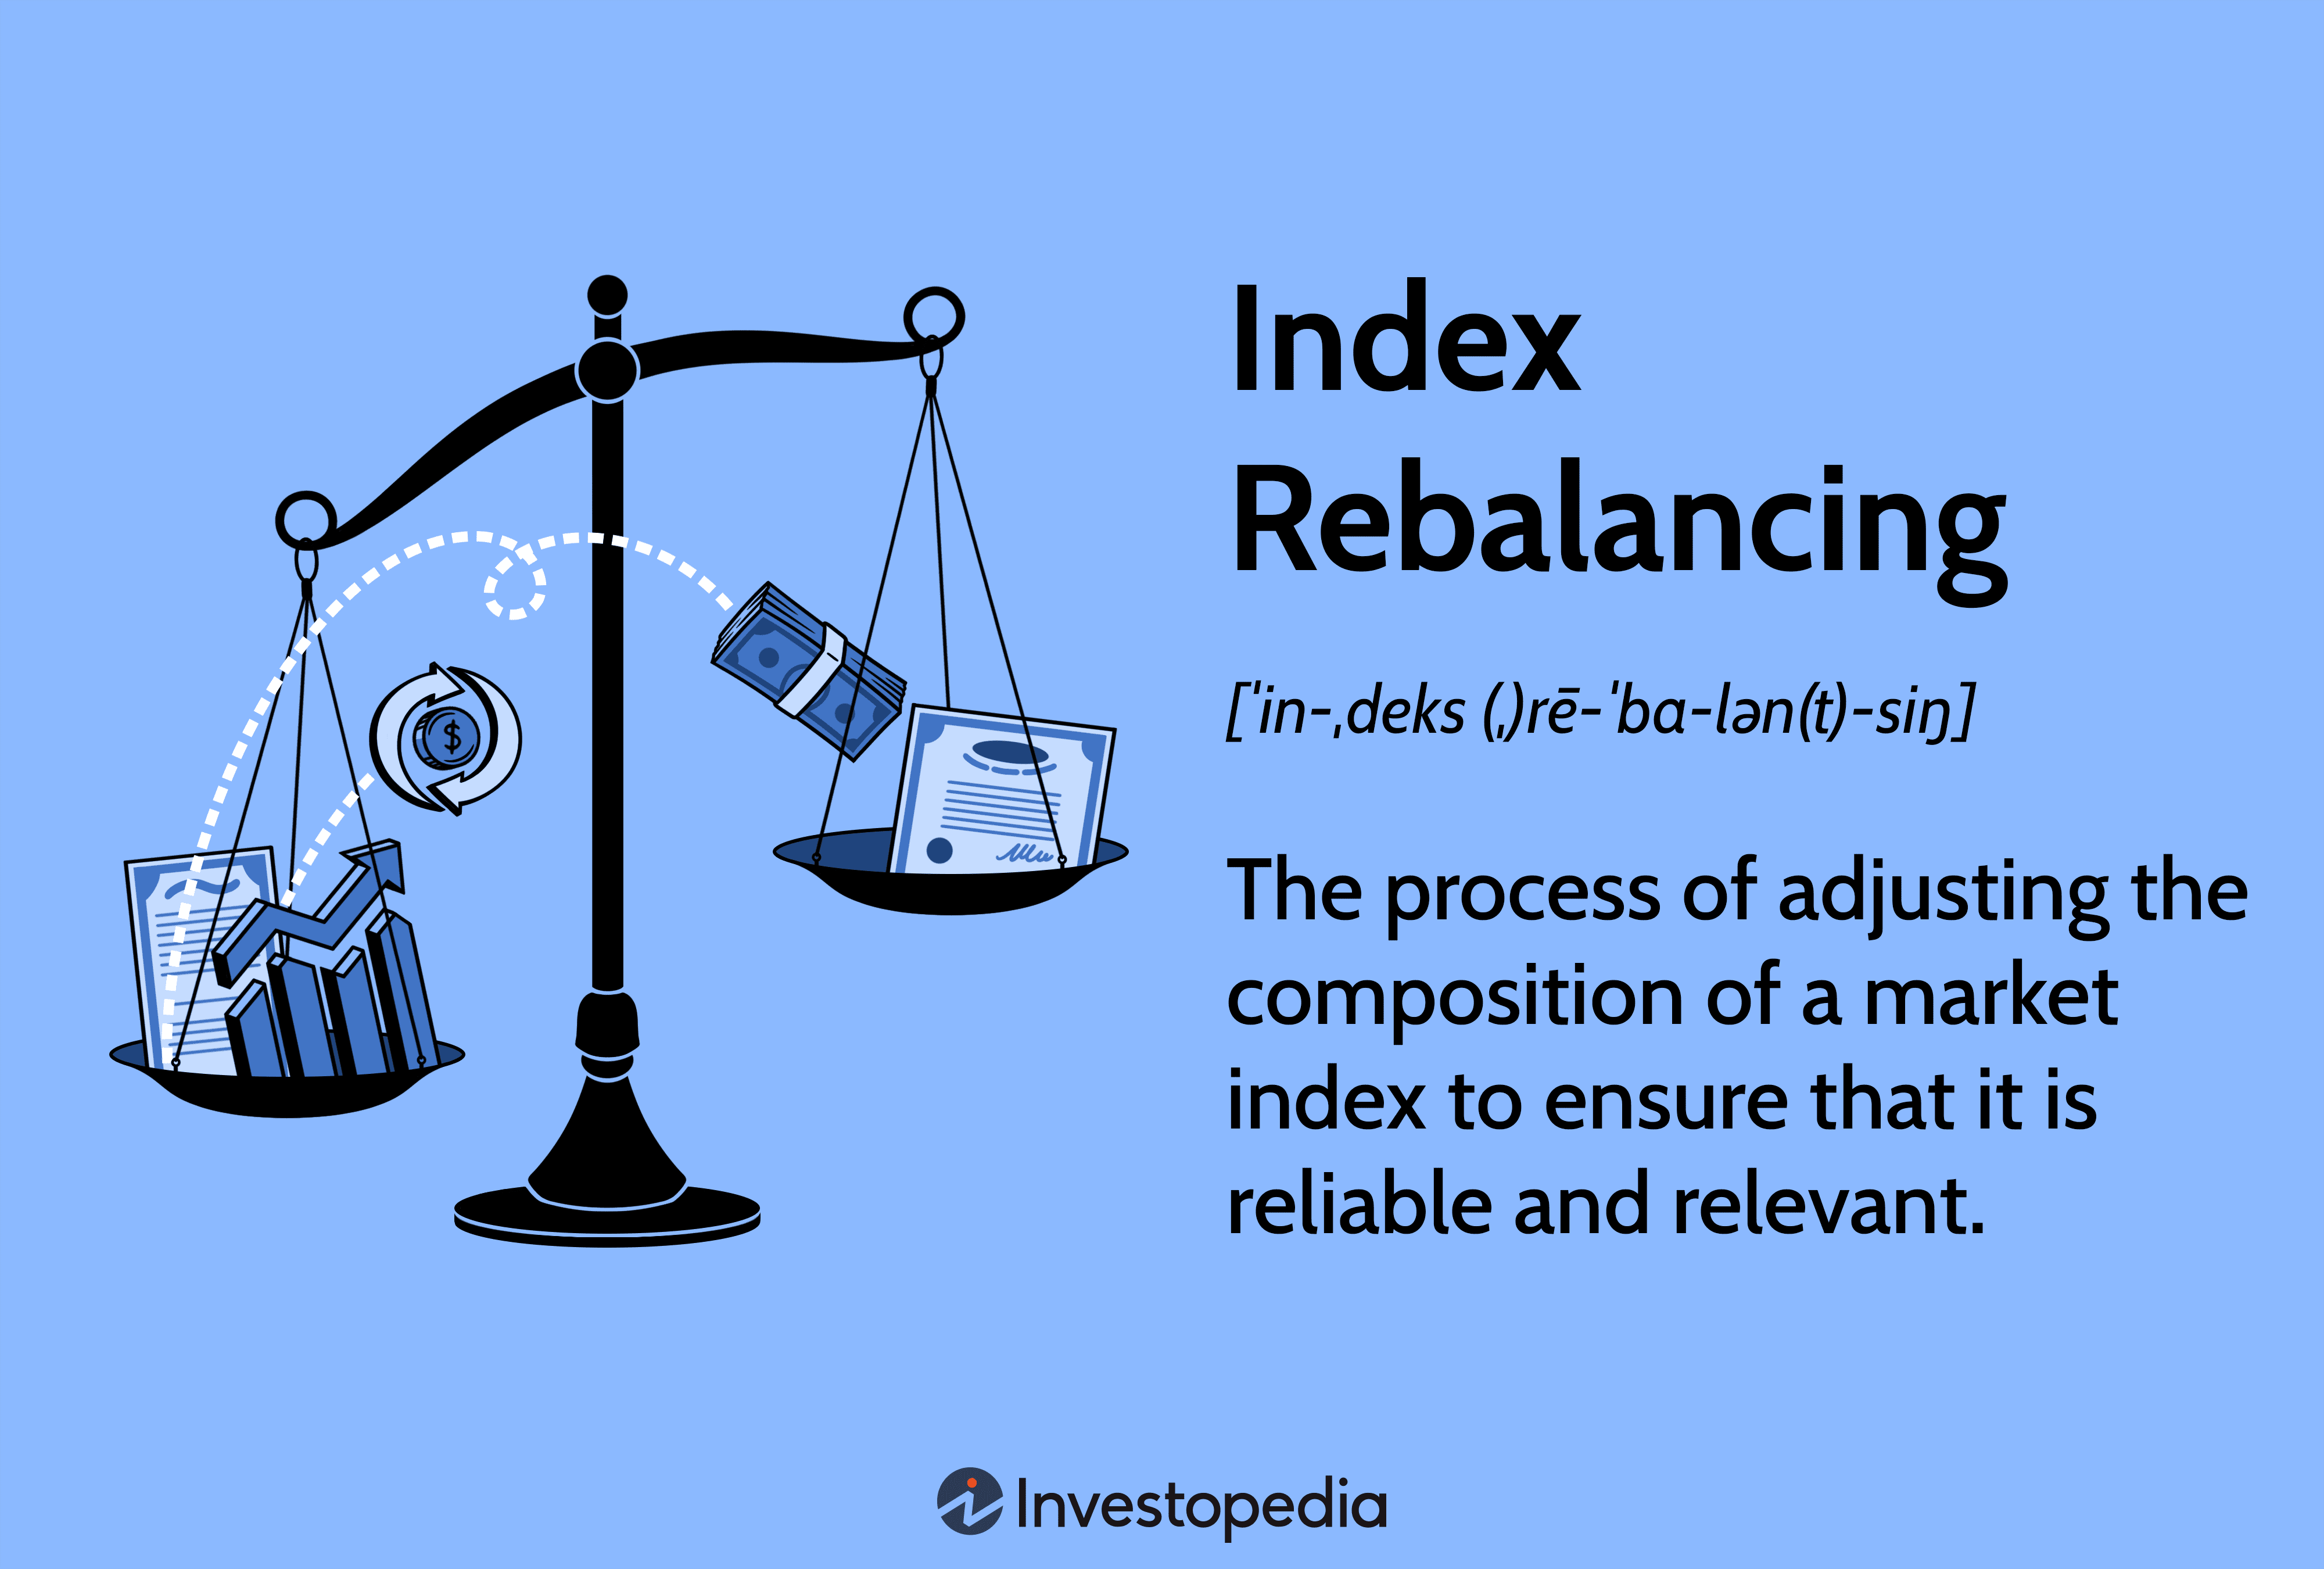 Index Rebalancing